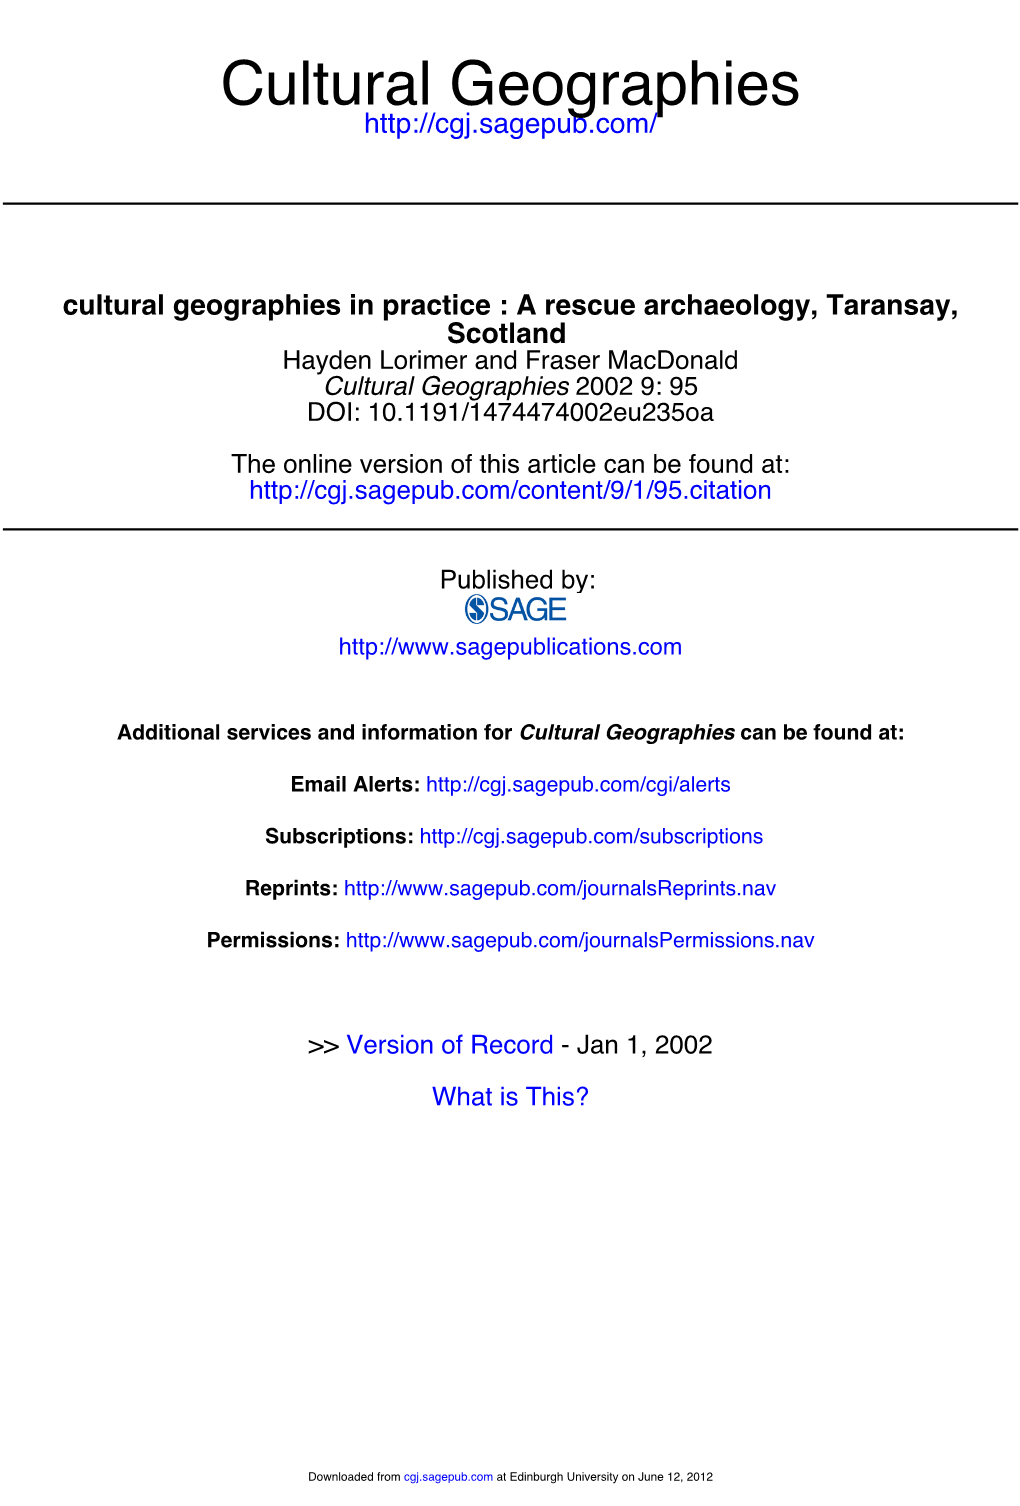 A Rescue Archaeology, Taransay, Scotland Hayden Lorimer and Fraser Macdonald Cultural Geographies 2002 9: 95 DOI: 10.1191/1474474002Eu235oa